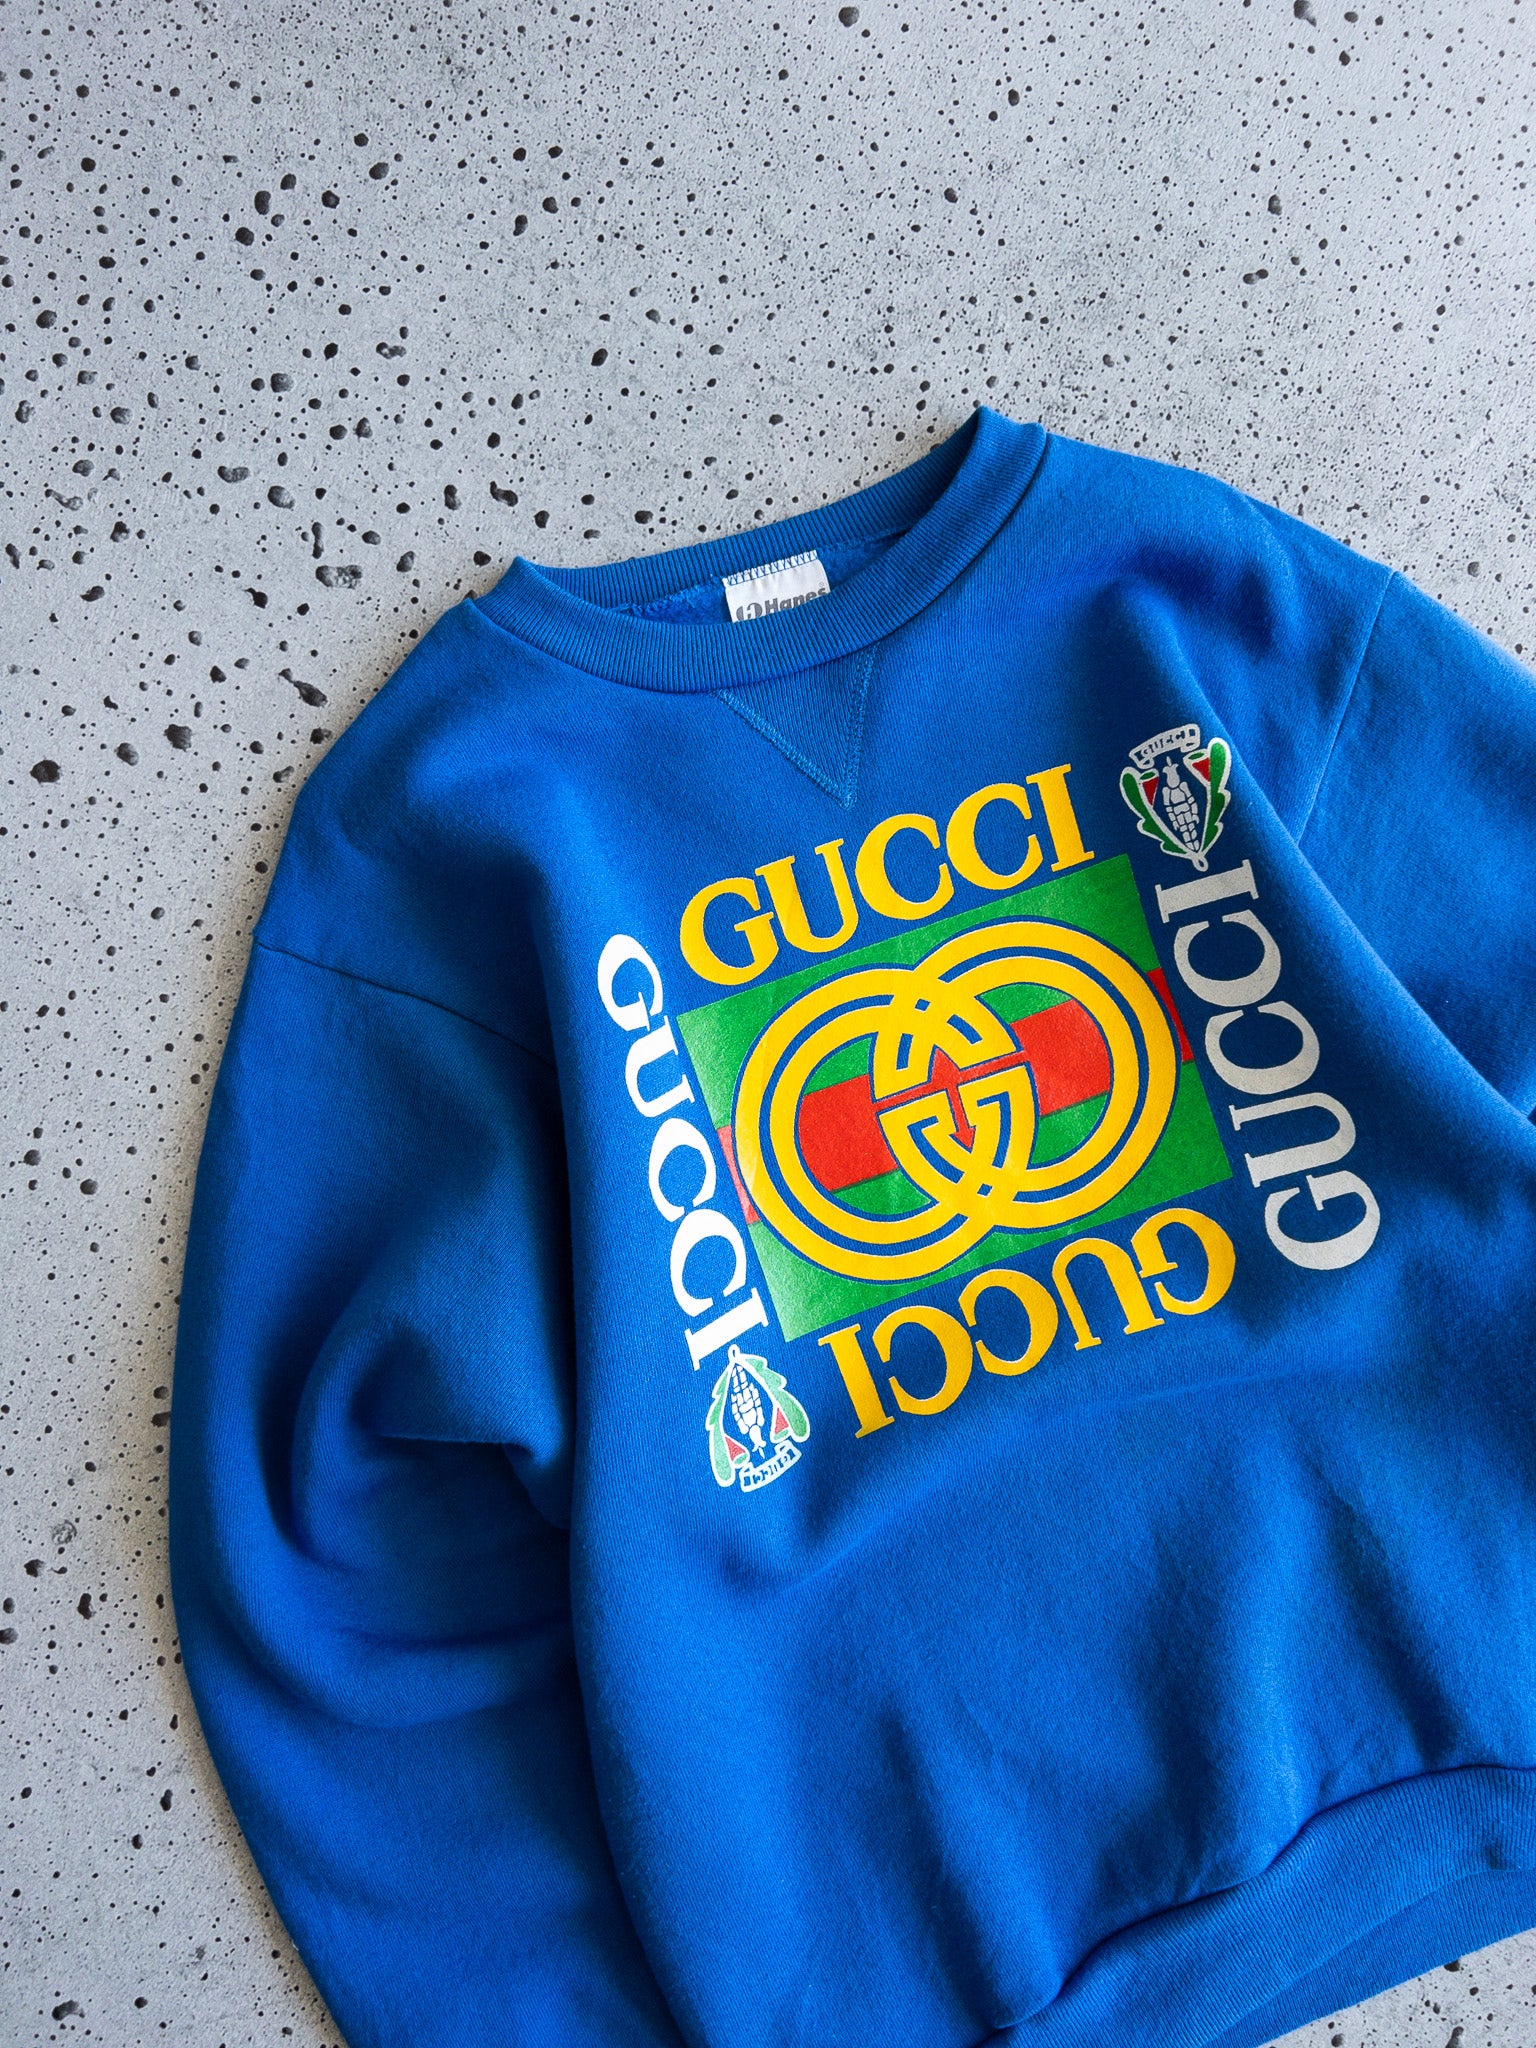 Vintage Gucci Sweatshirt (M)